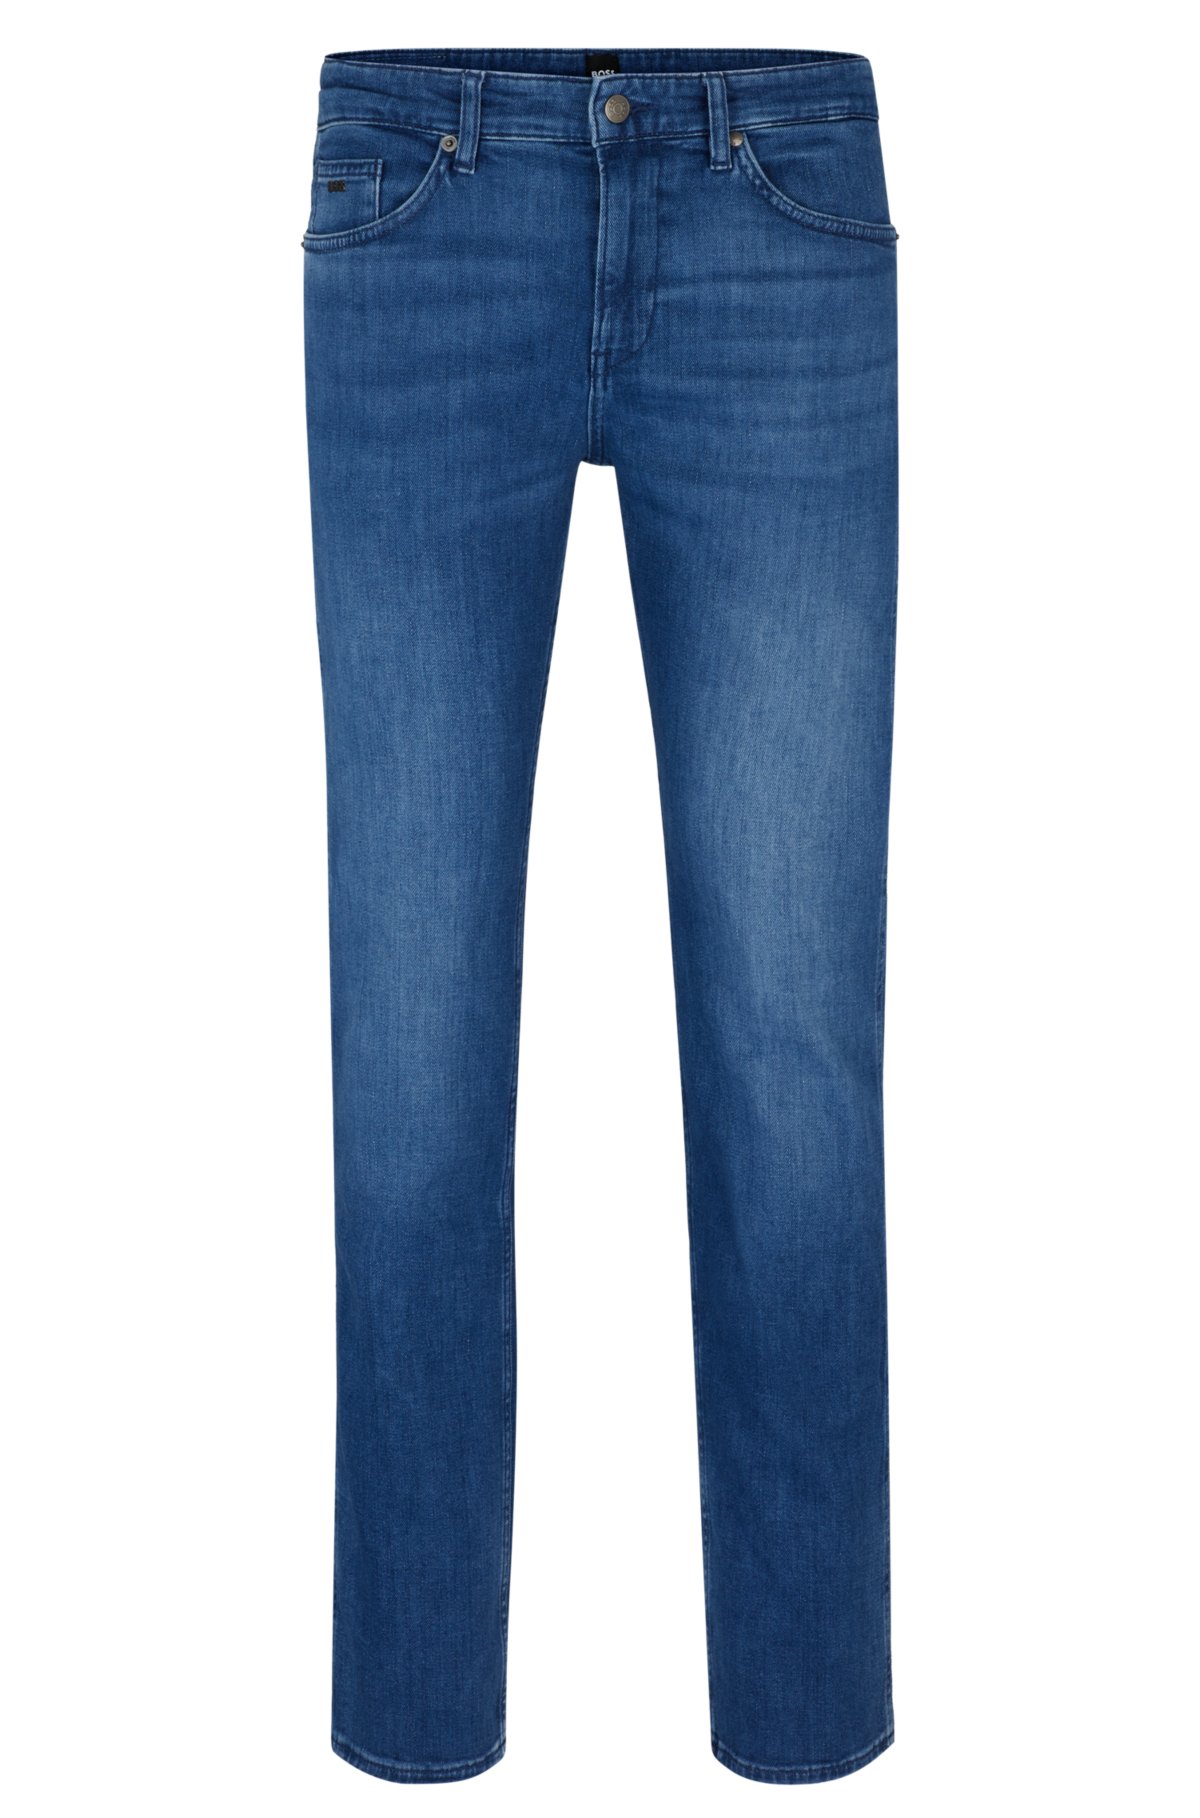 jeans Italian in denim BOSS - blue cashmere-touch Slim-fit